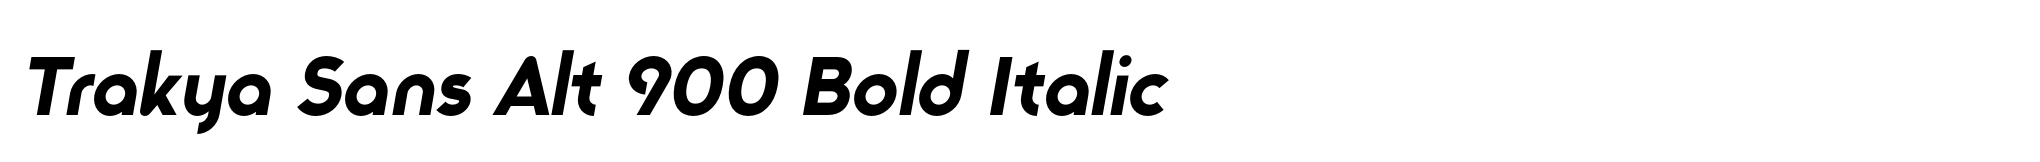 Trakya Sans Alt 900 Bold Italic image